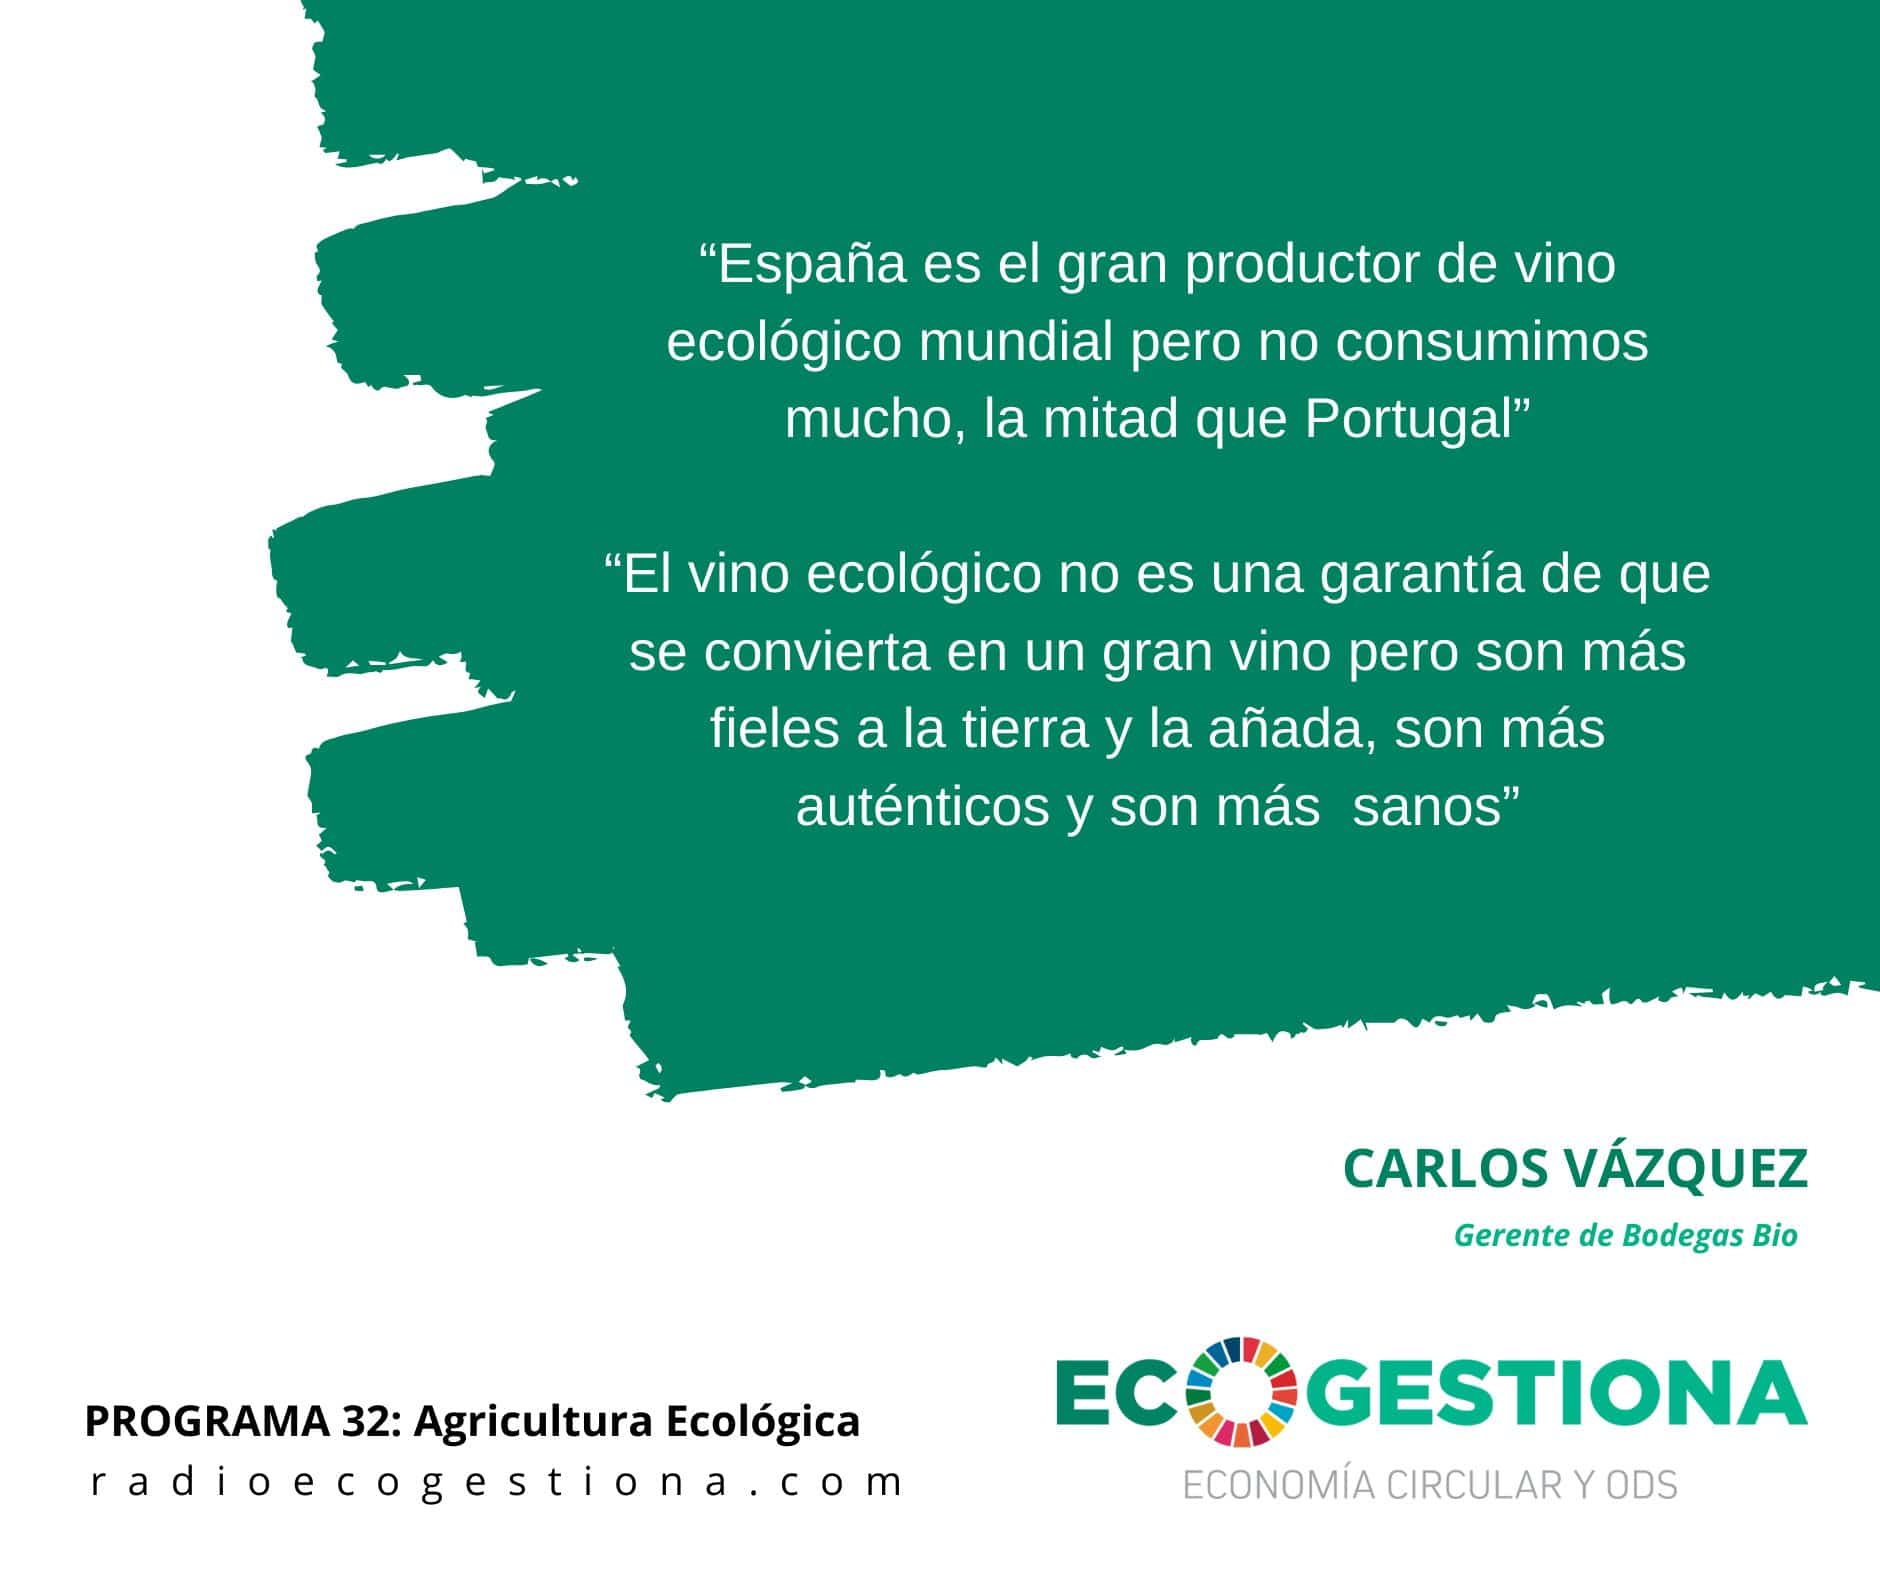 (Podcast) Entrevista en Ecogestiona a Carlos Vázquez, fundador de bodegas.bio